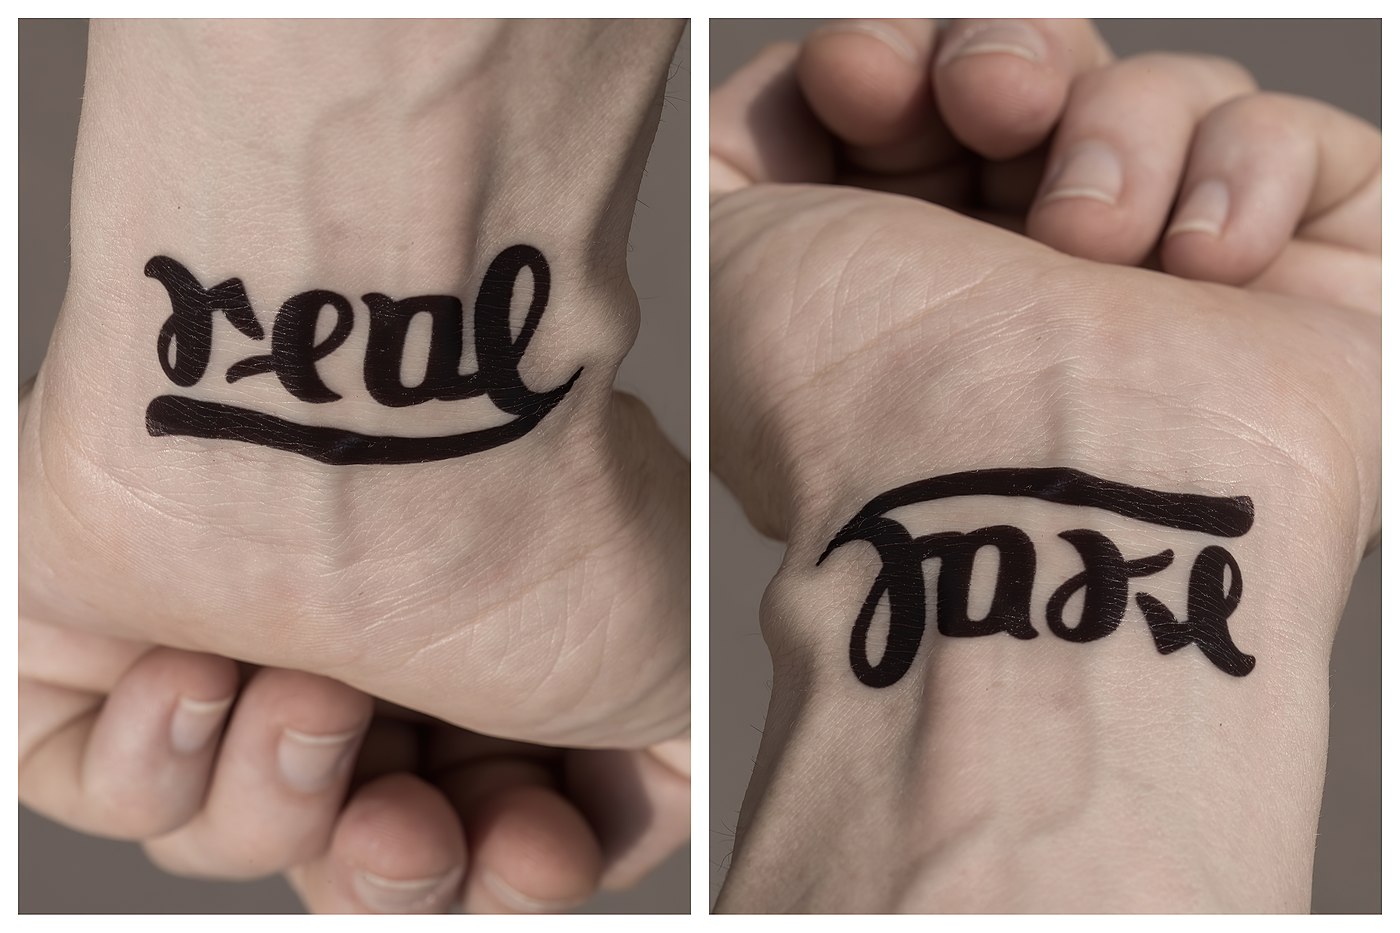 Design Ambigram Tattoos In 7 Step Tutorials - Make Ambigrams